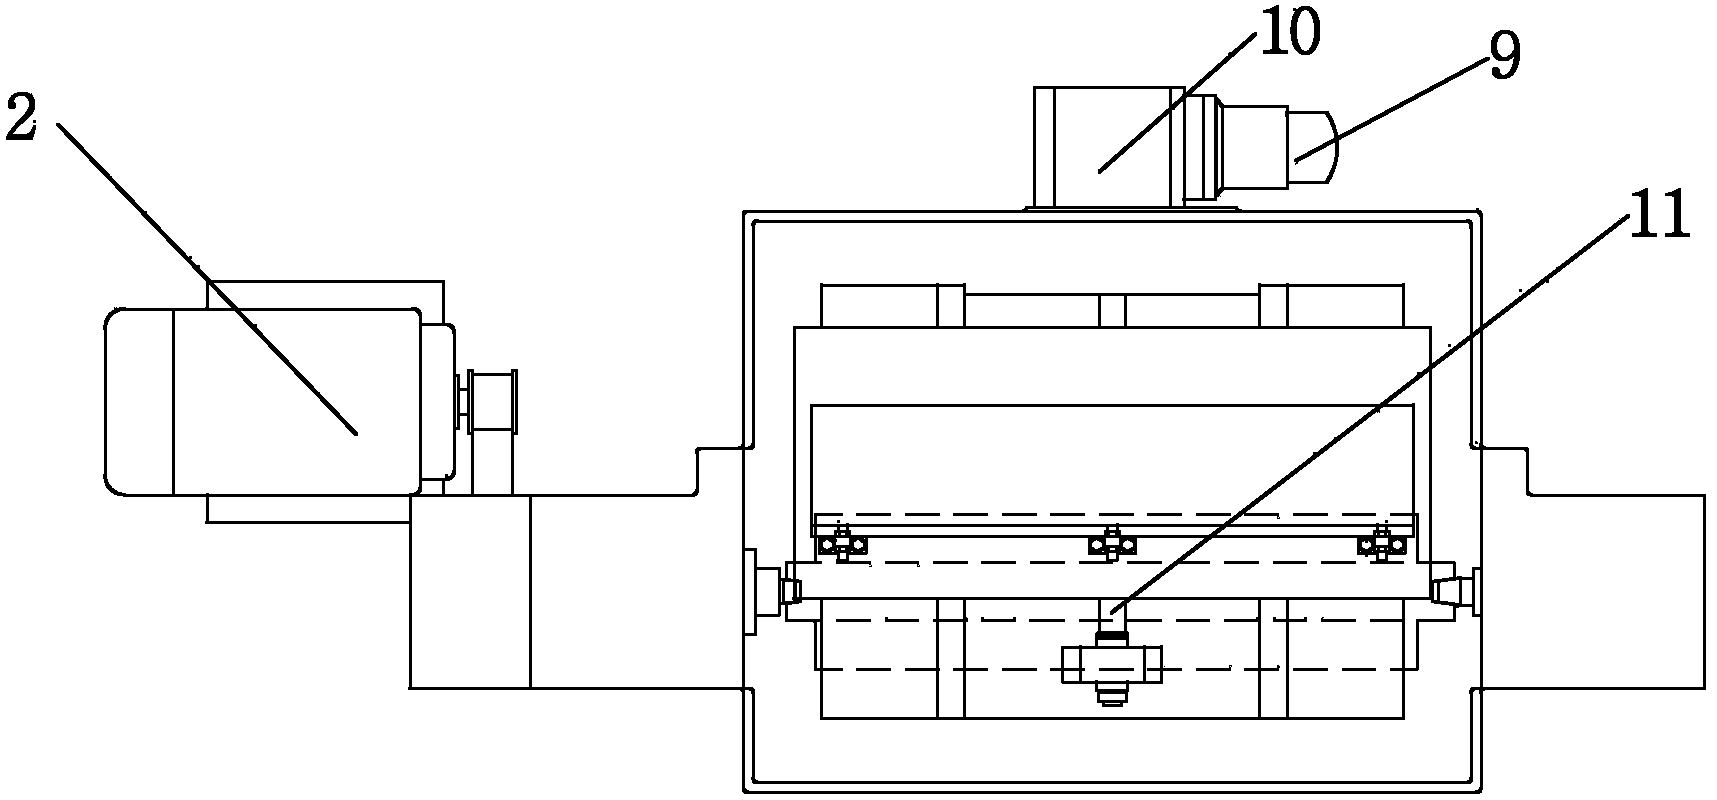 Numerical control film rotary cutter